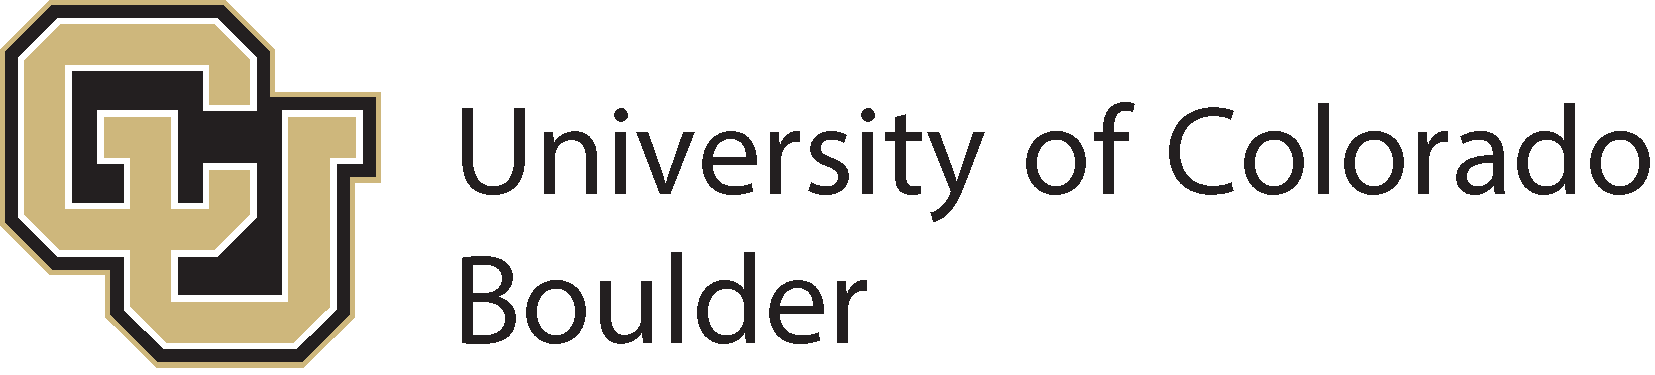 Logotip Boulder University of Colorado (CU Boulder) - SVG, PNG, AI, EPS ...